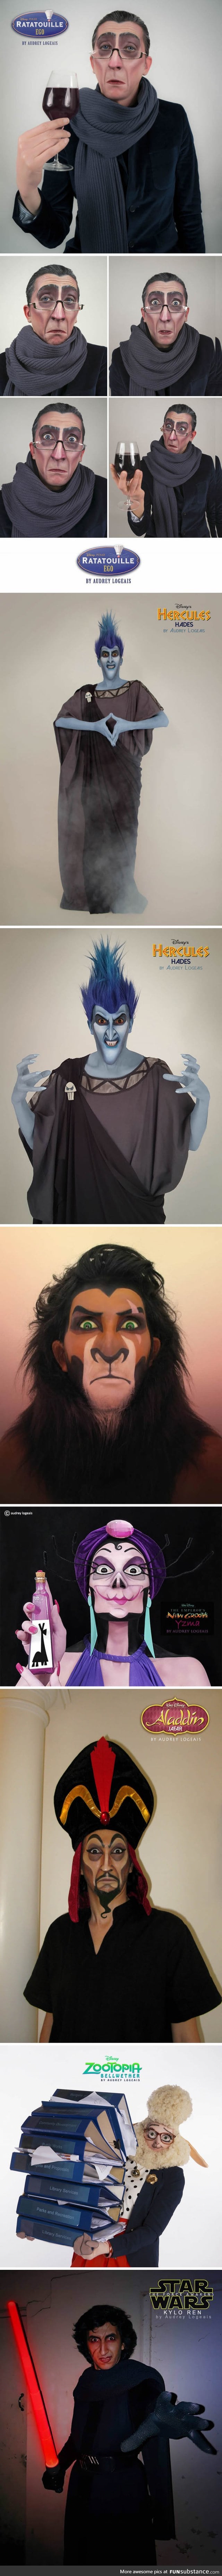 This makeup artist turns people into Disney villains